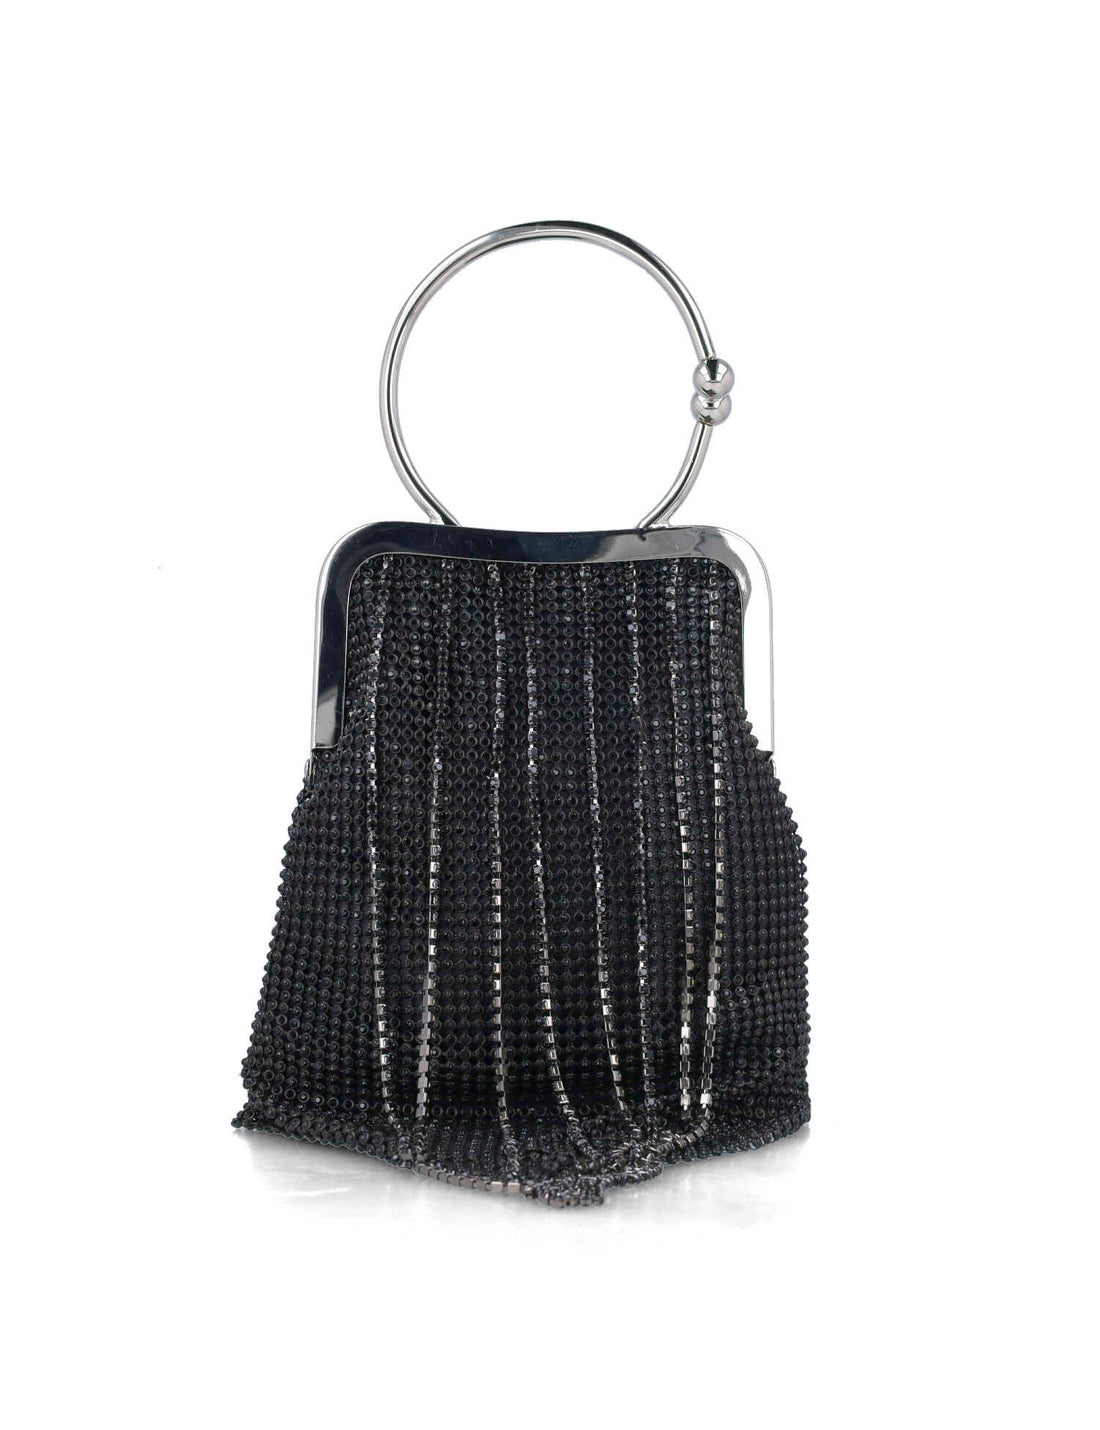 Embellished Handbag With Round Handles_85687_01_01